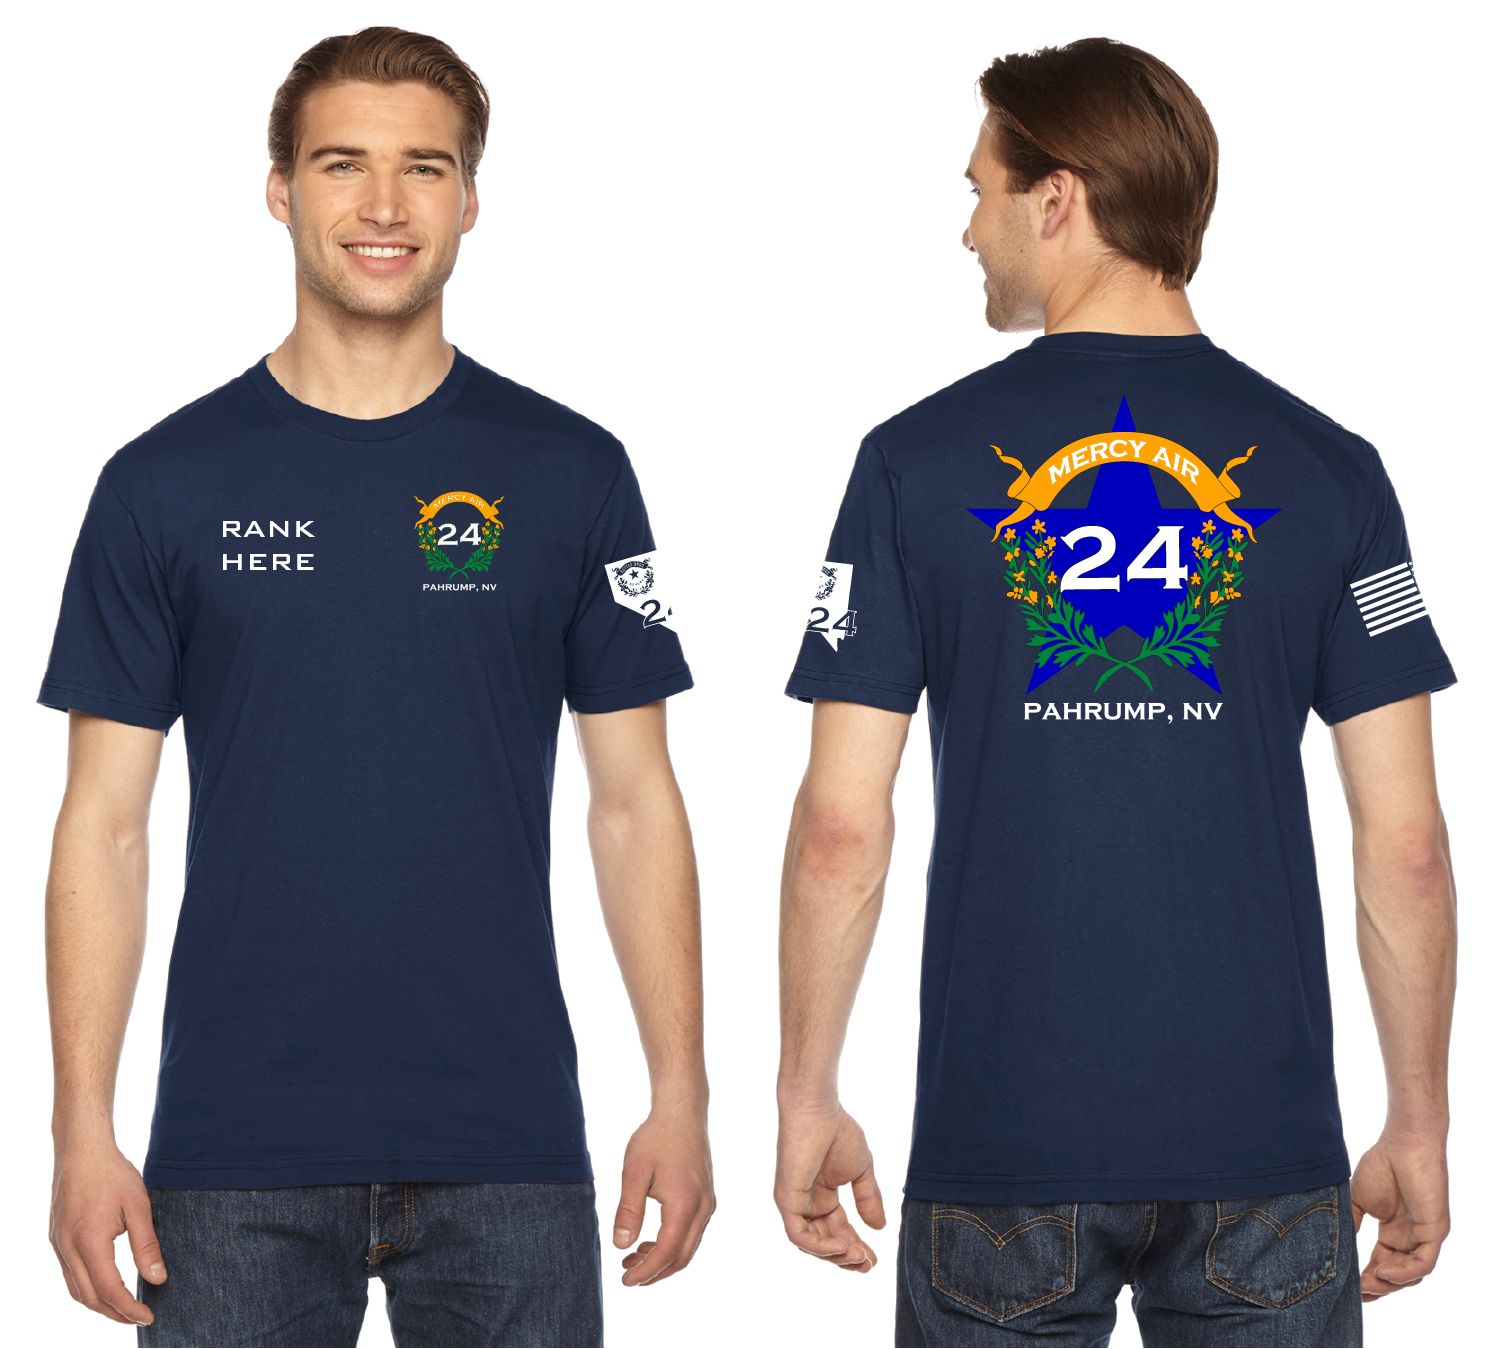 Mercy Air T-Shirt Design #2